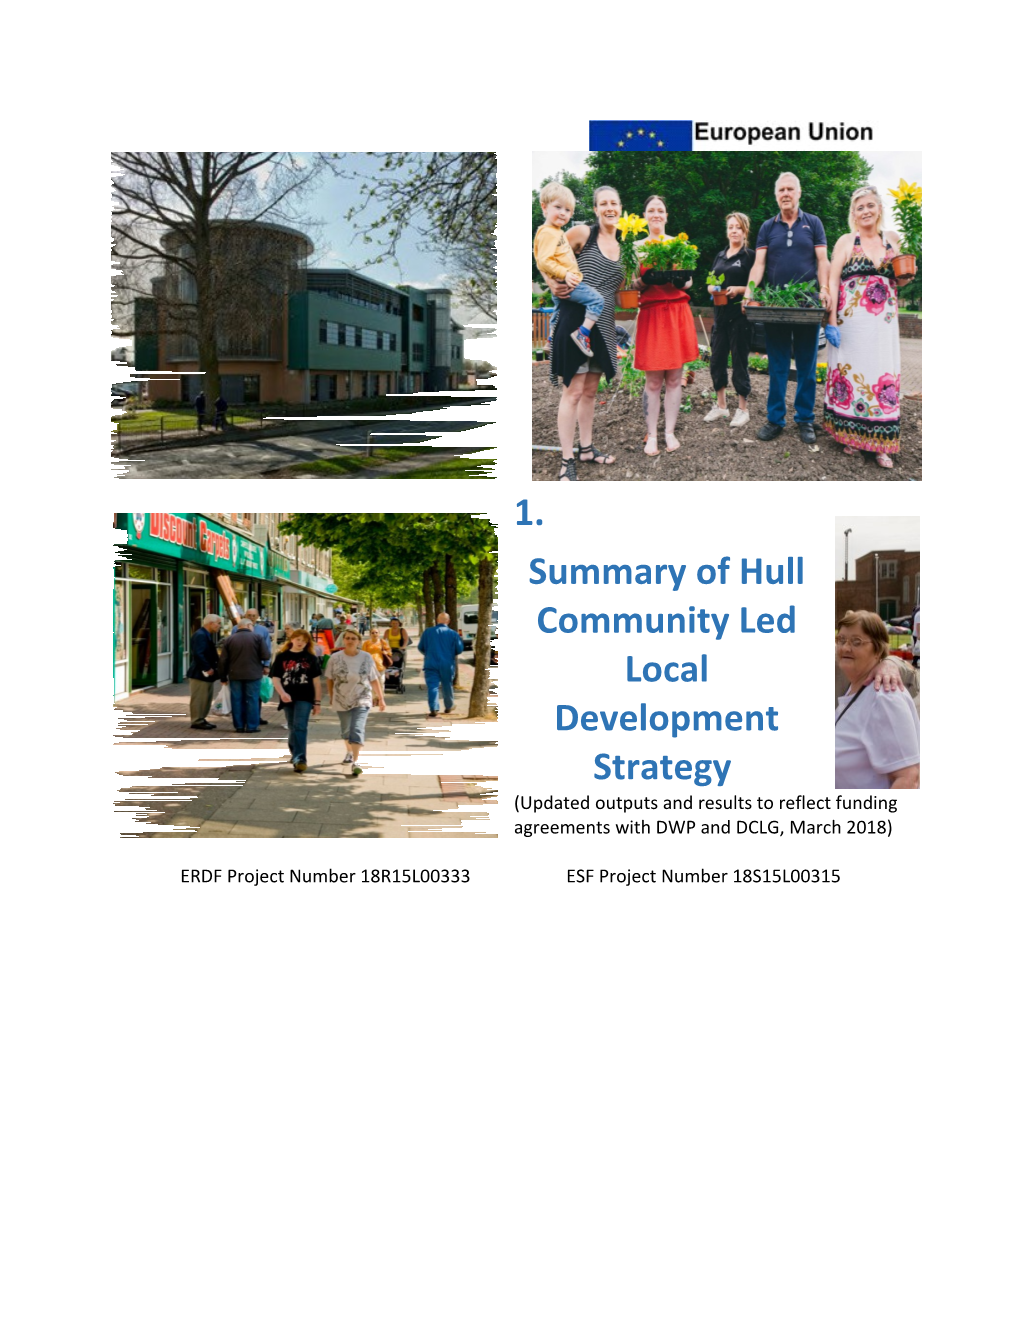 Summary of Hull Community Led Local Development Strategy